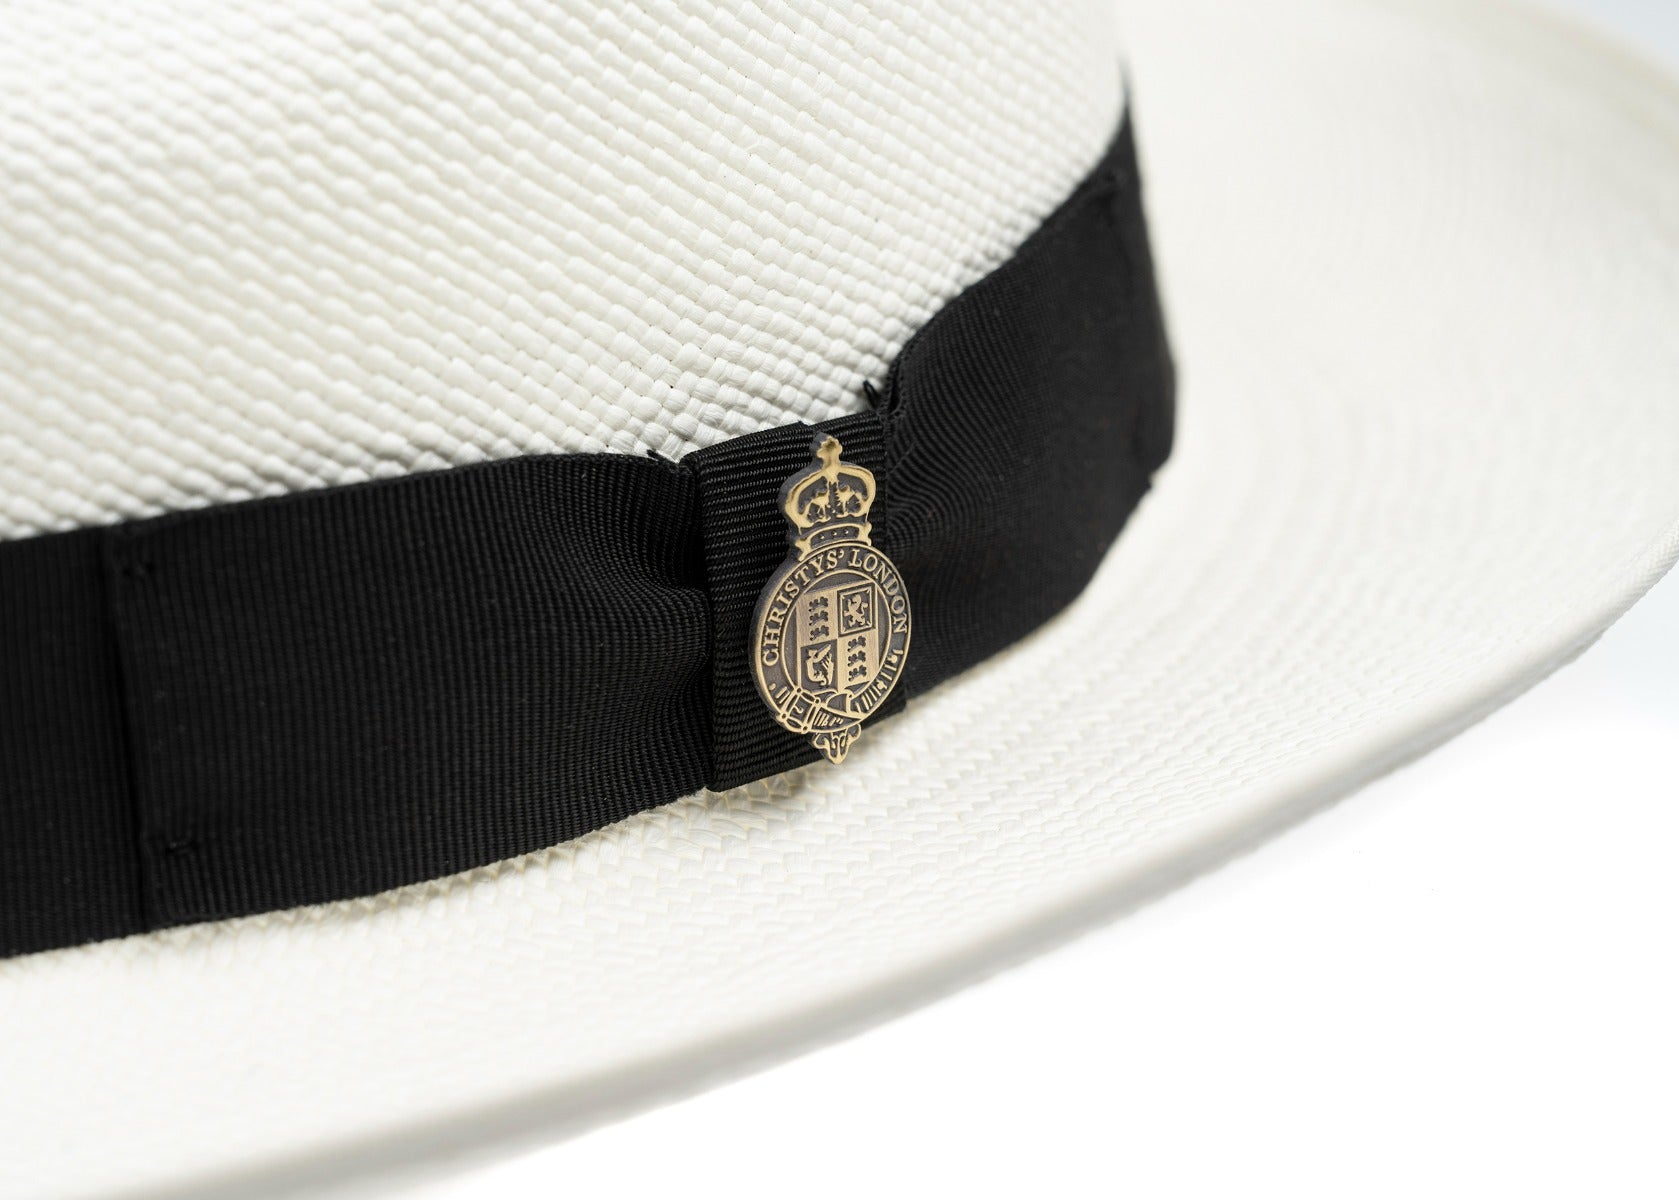 Superfine Preset Panama Hat With Black Band & Cream Binding